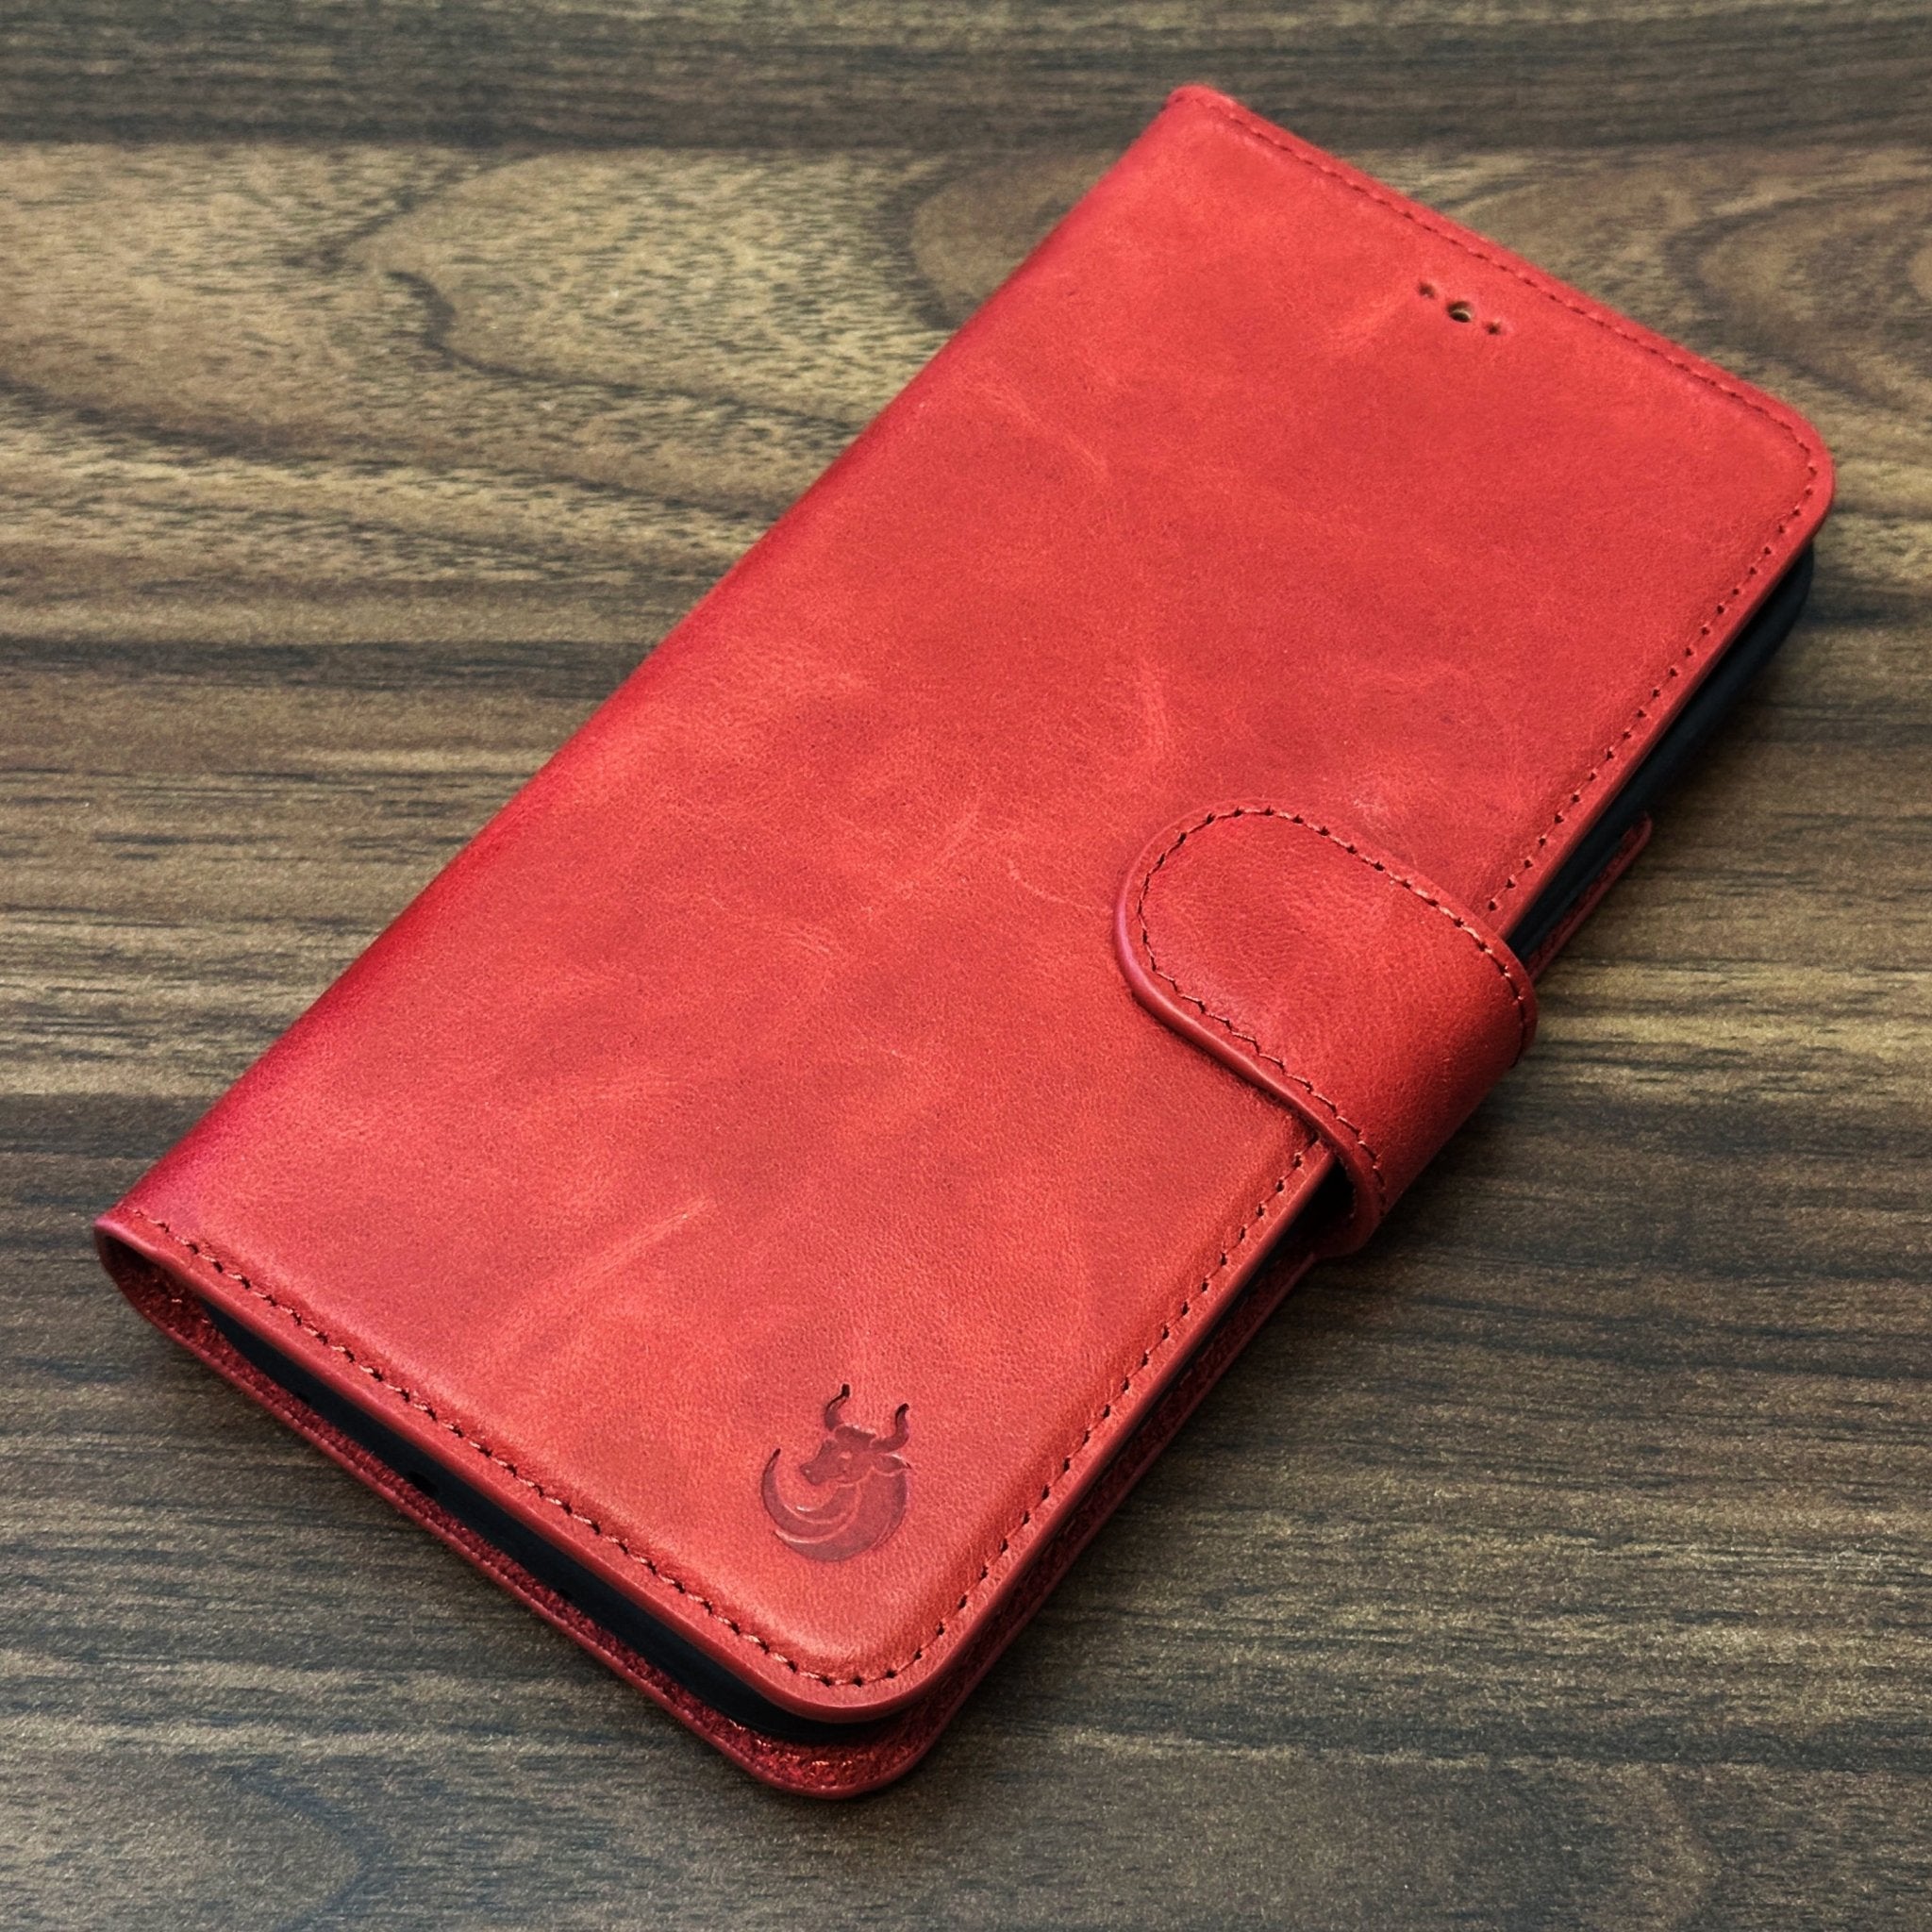 Nevada Samsung Galaxy S24 Wallet Case-Red---TORONATA